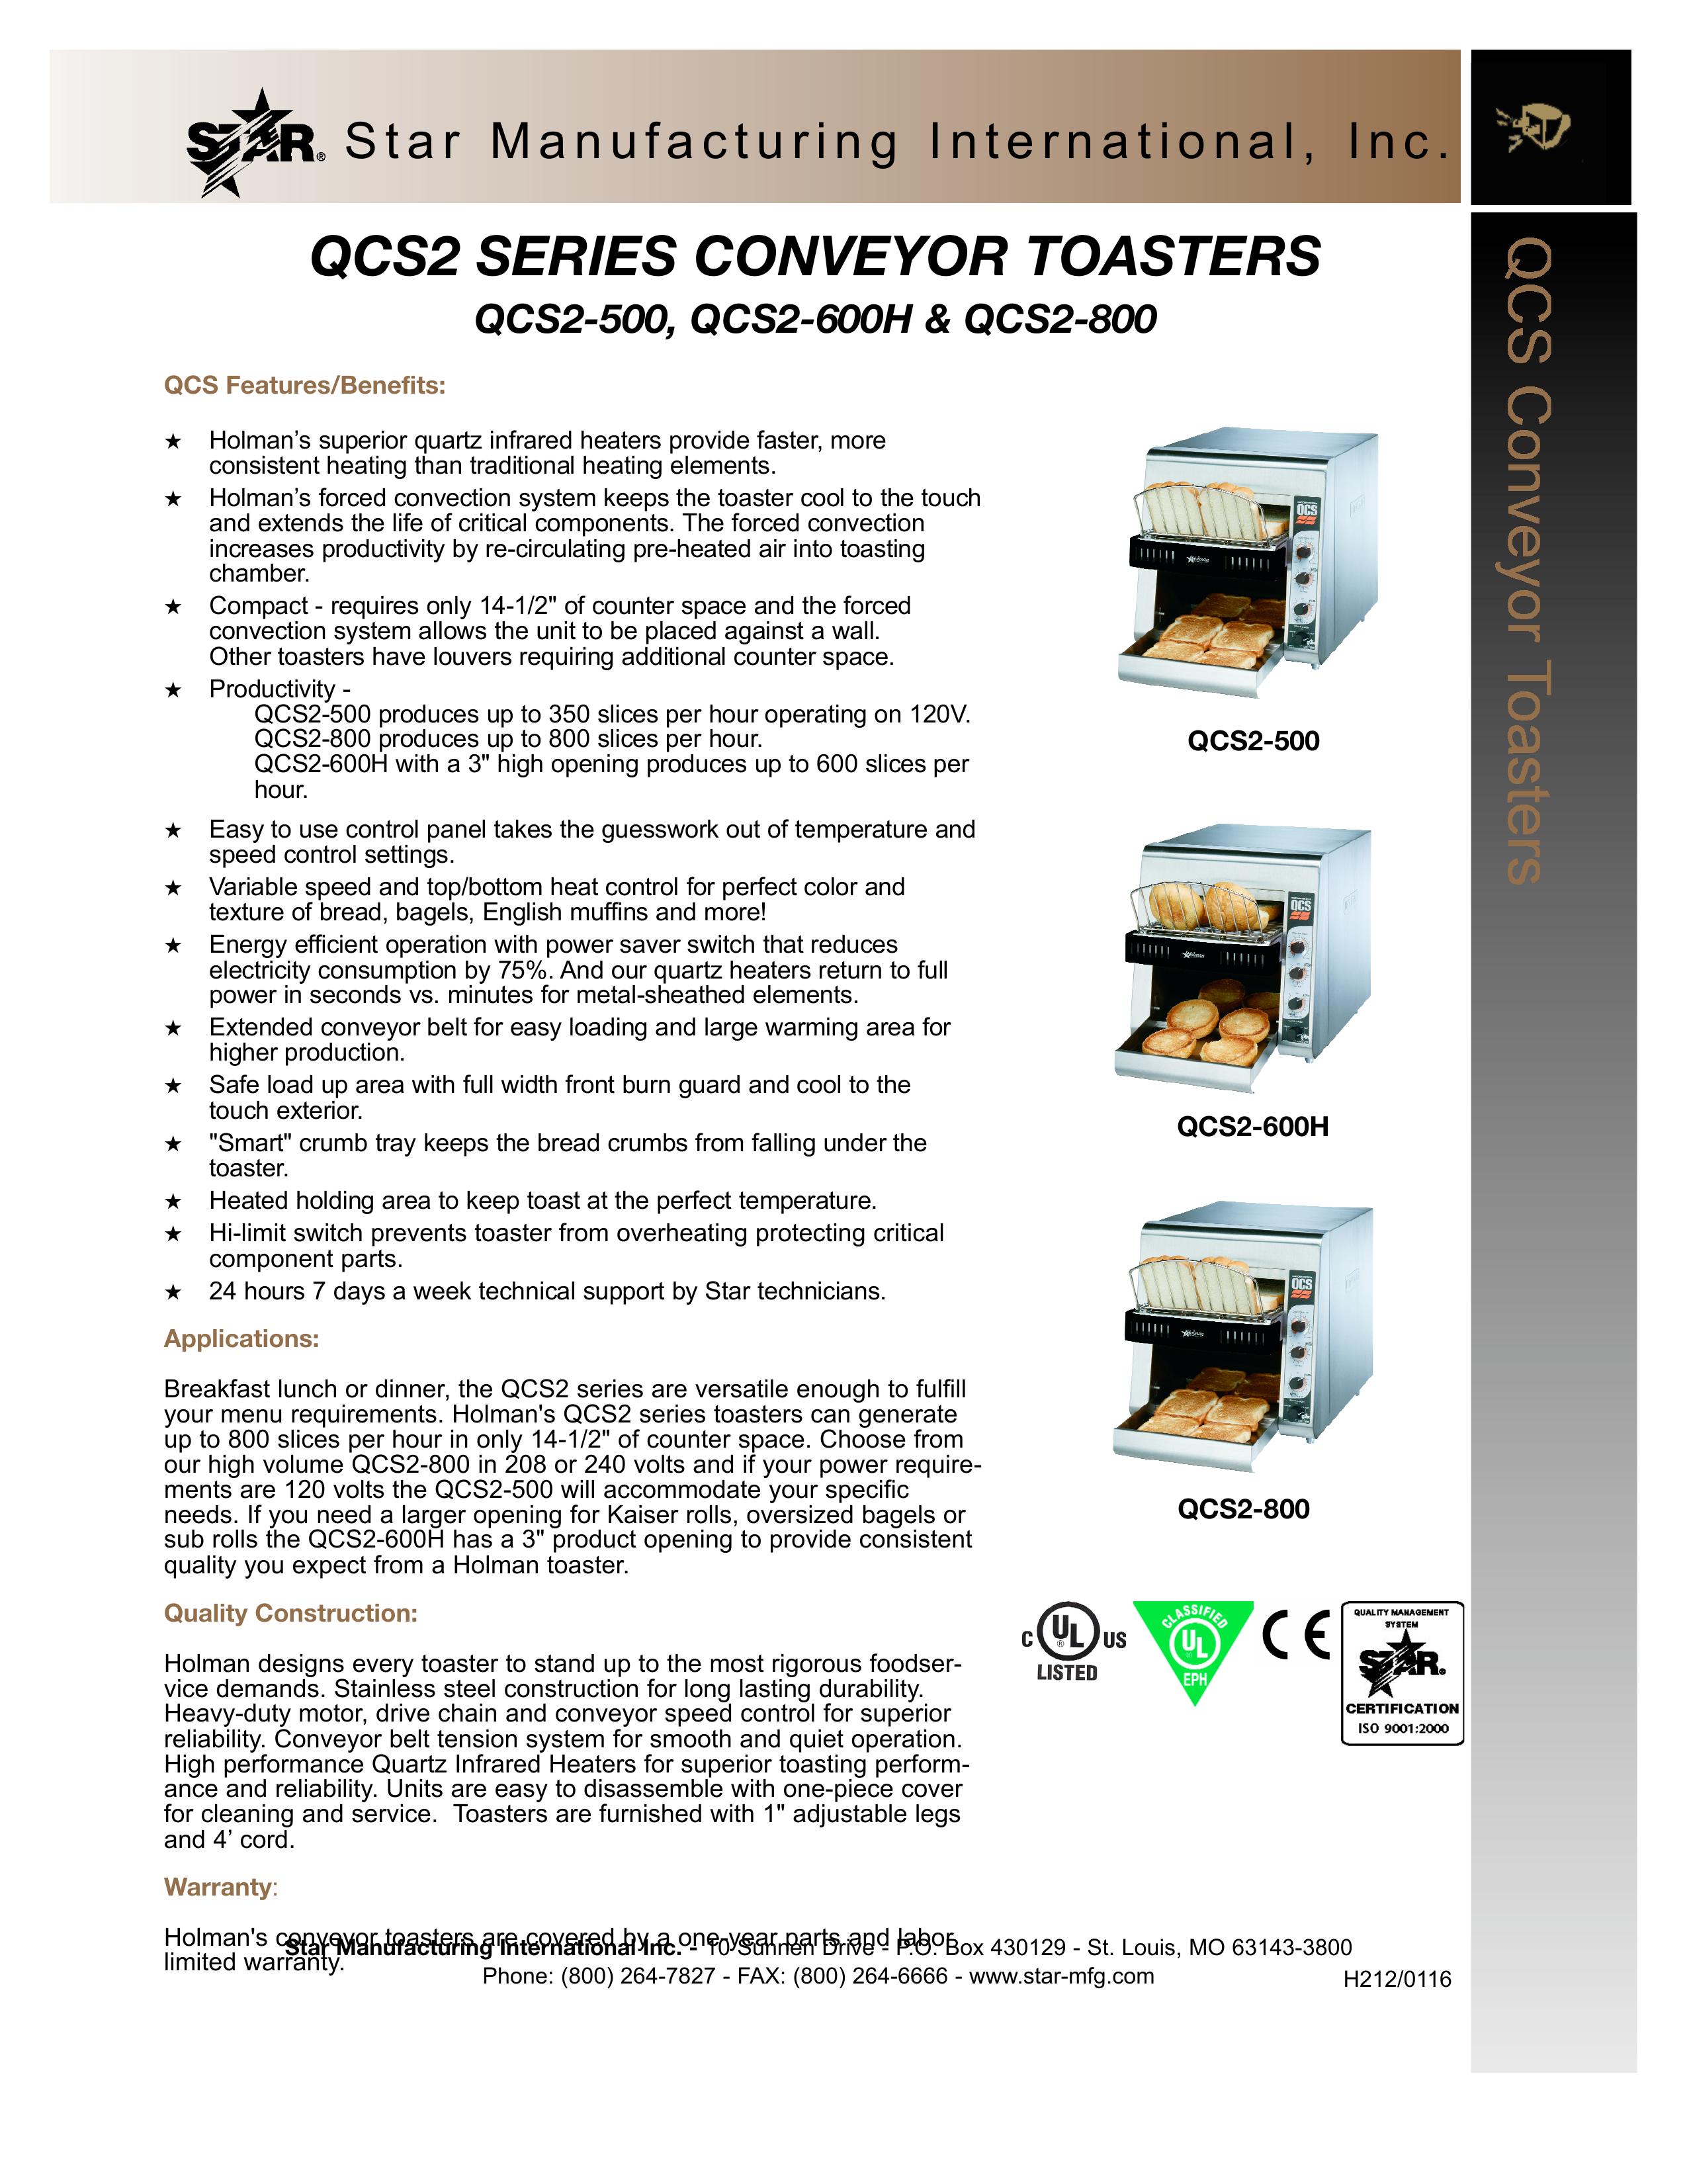 Star Manufacturing QCS2-800 Toaster User Manual